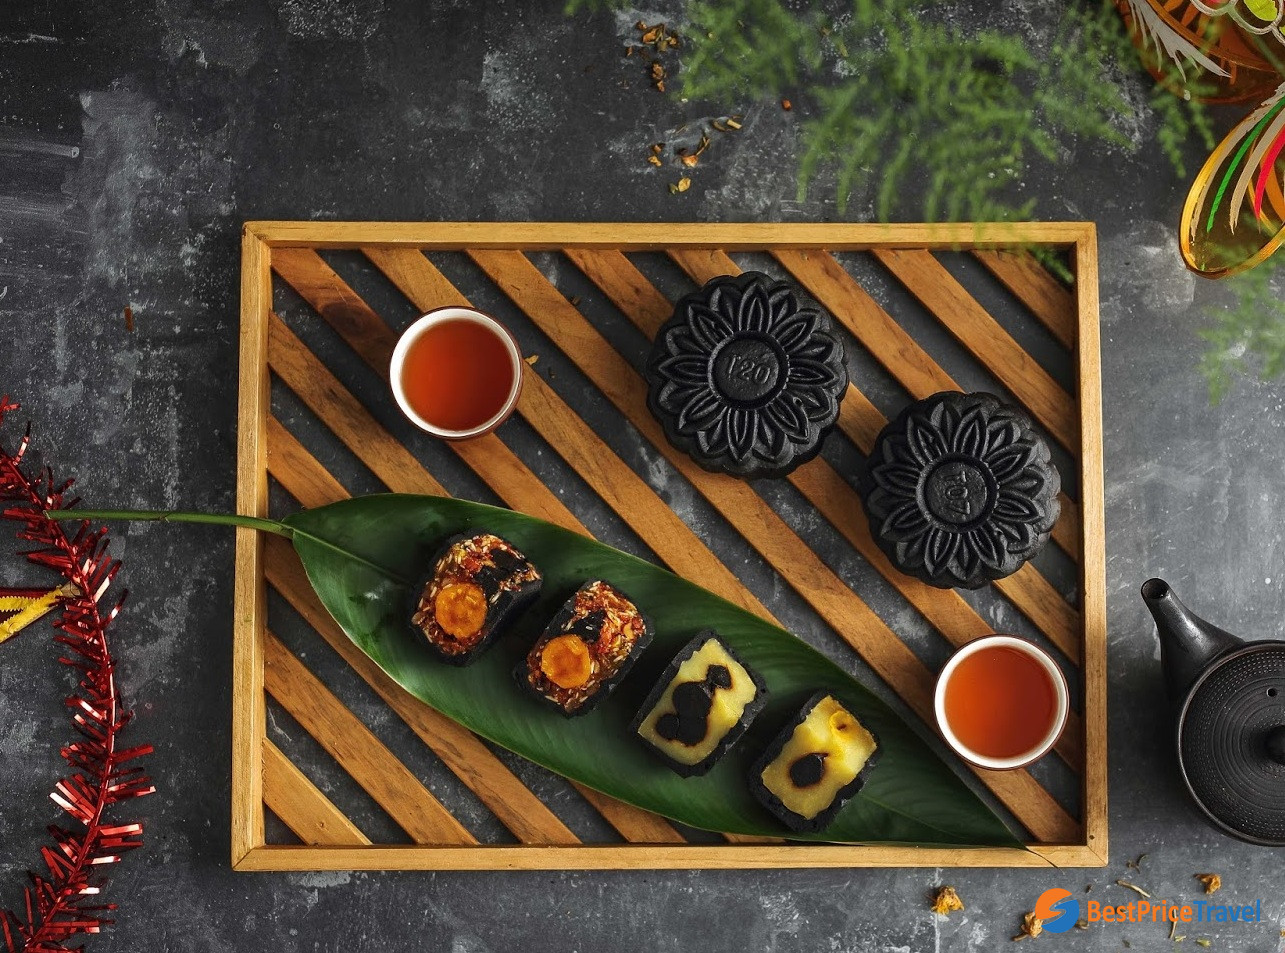 Black garlic mooncakes have been rising popular in Vietnam